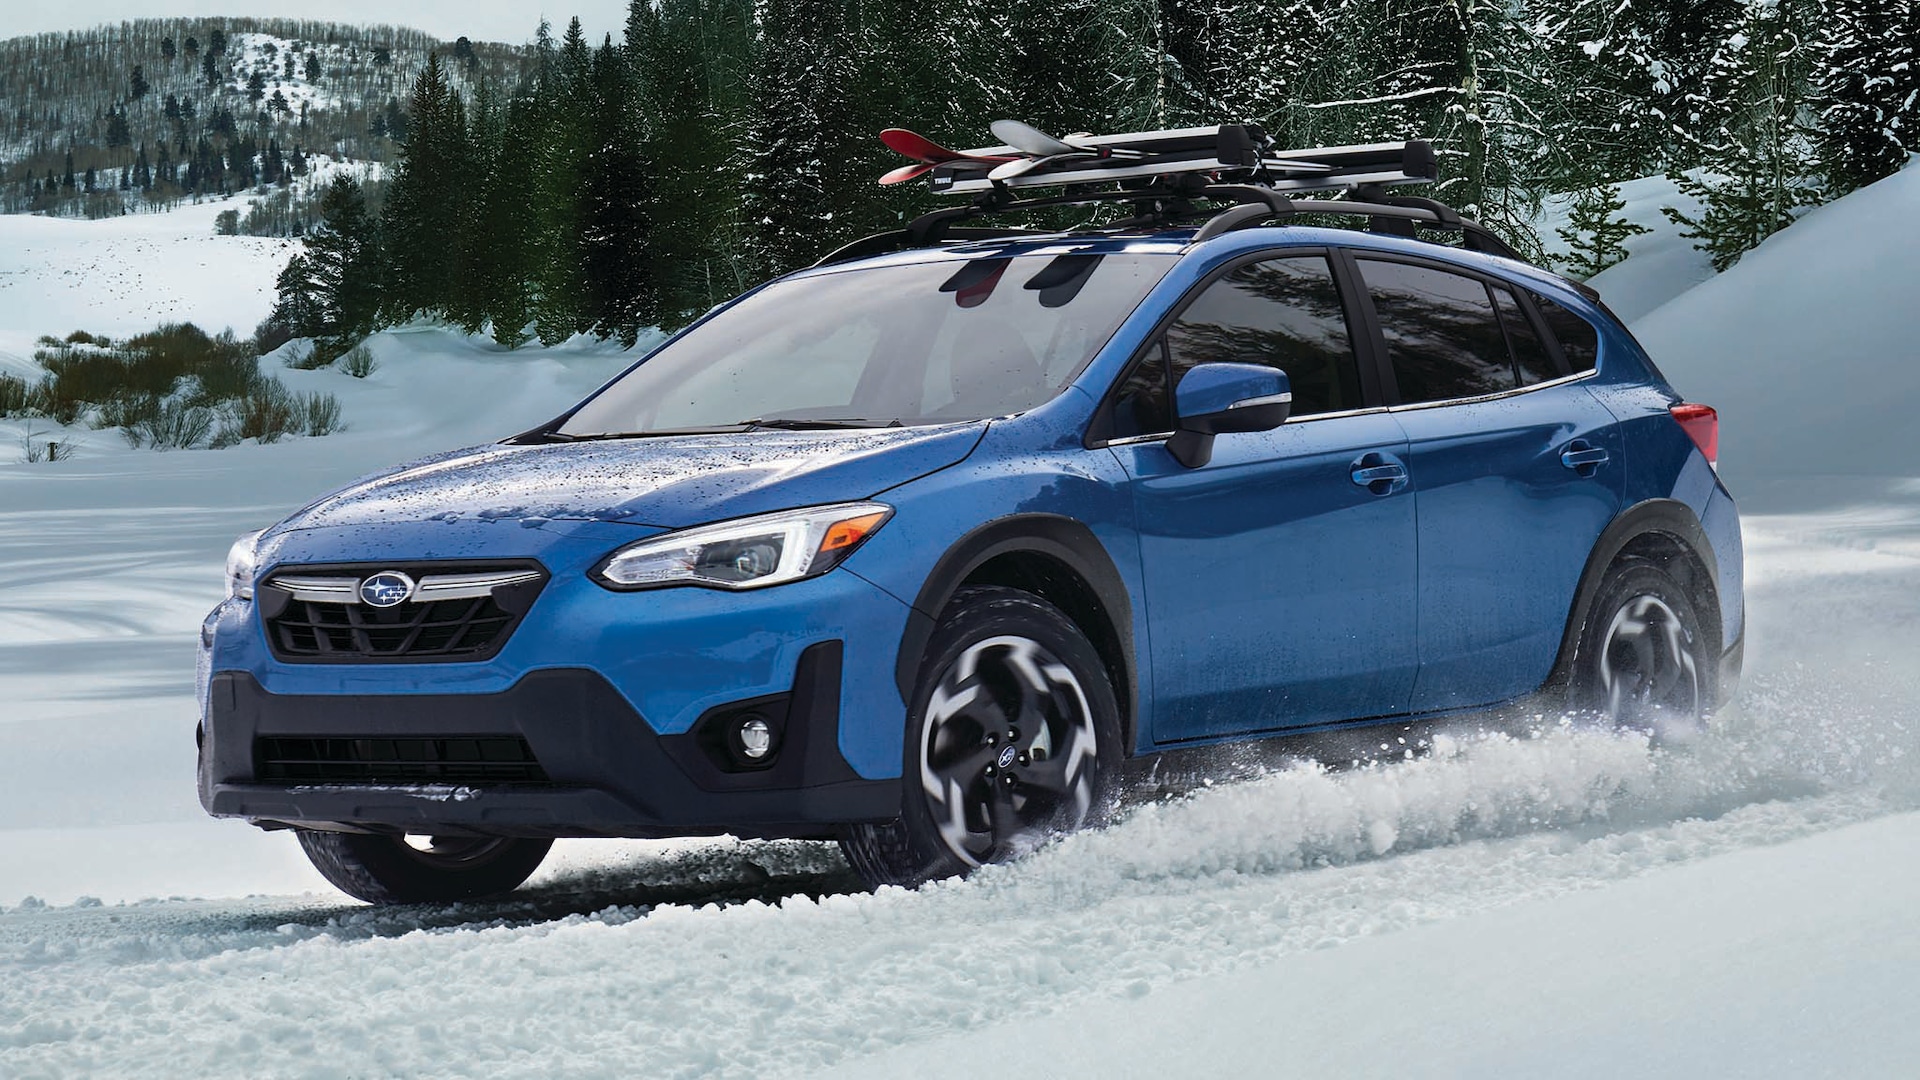 2022 Subaru Crosstrek Prices, Reviews, and Photos - MotorTrend